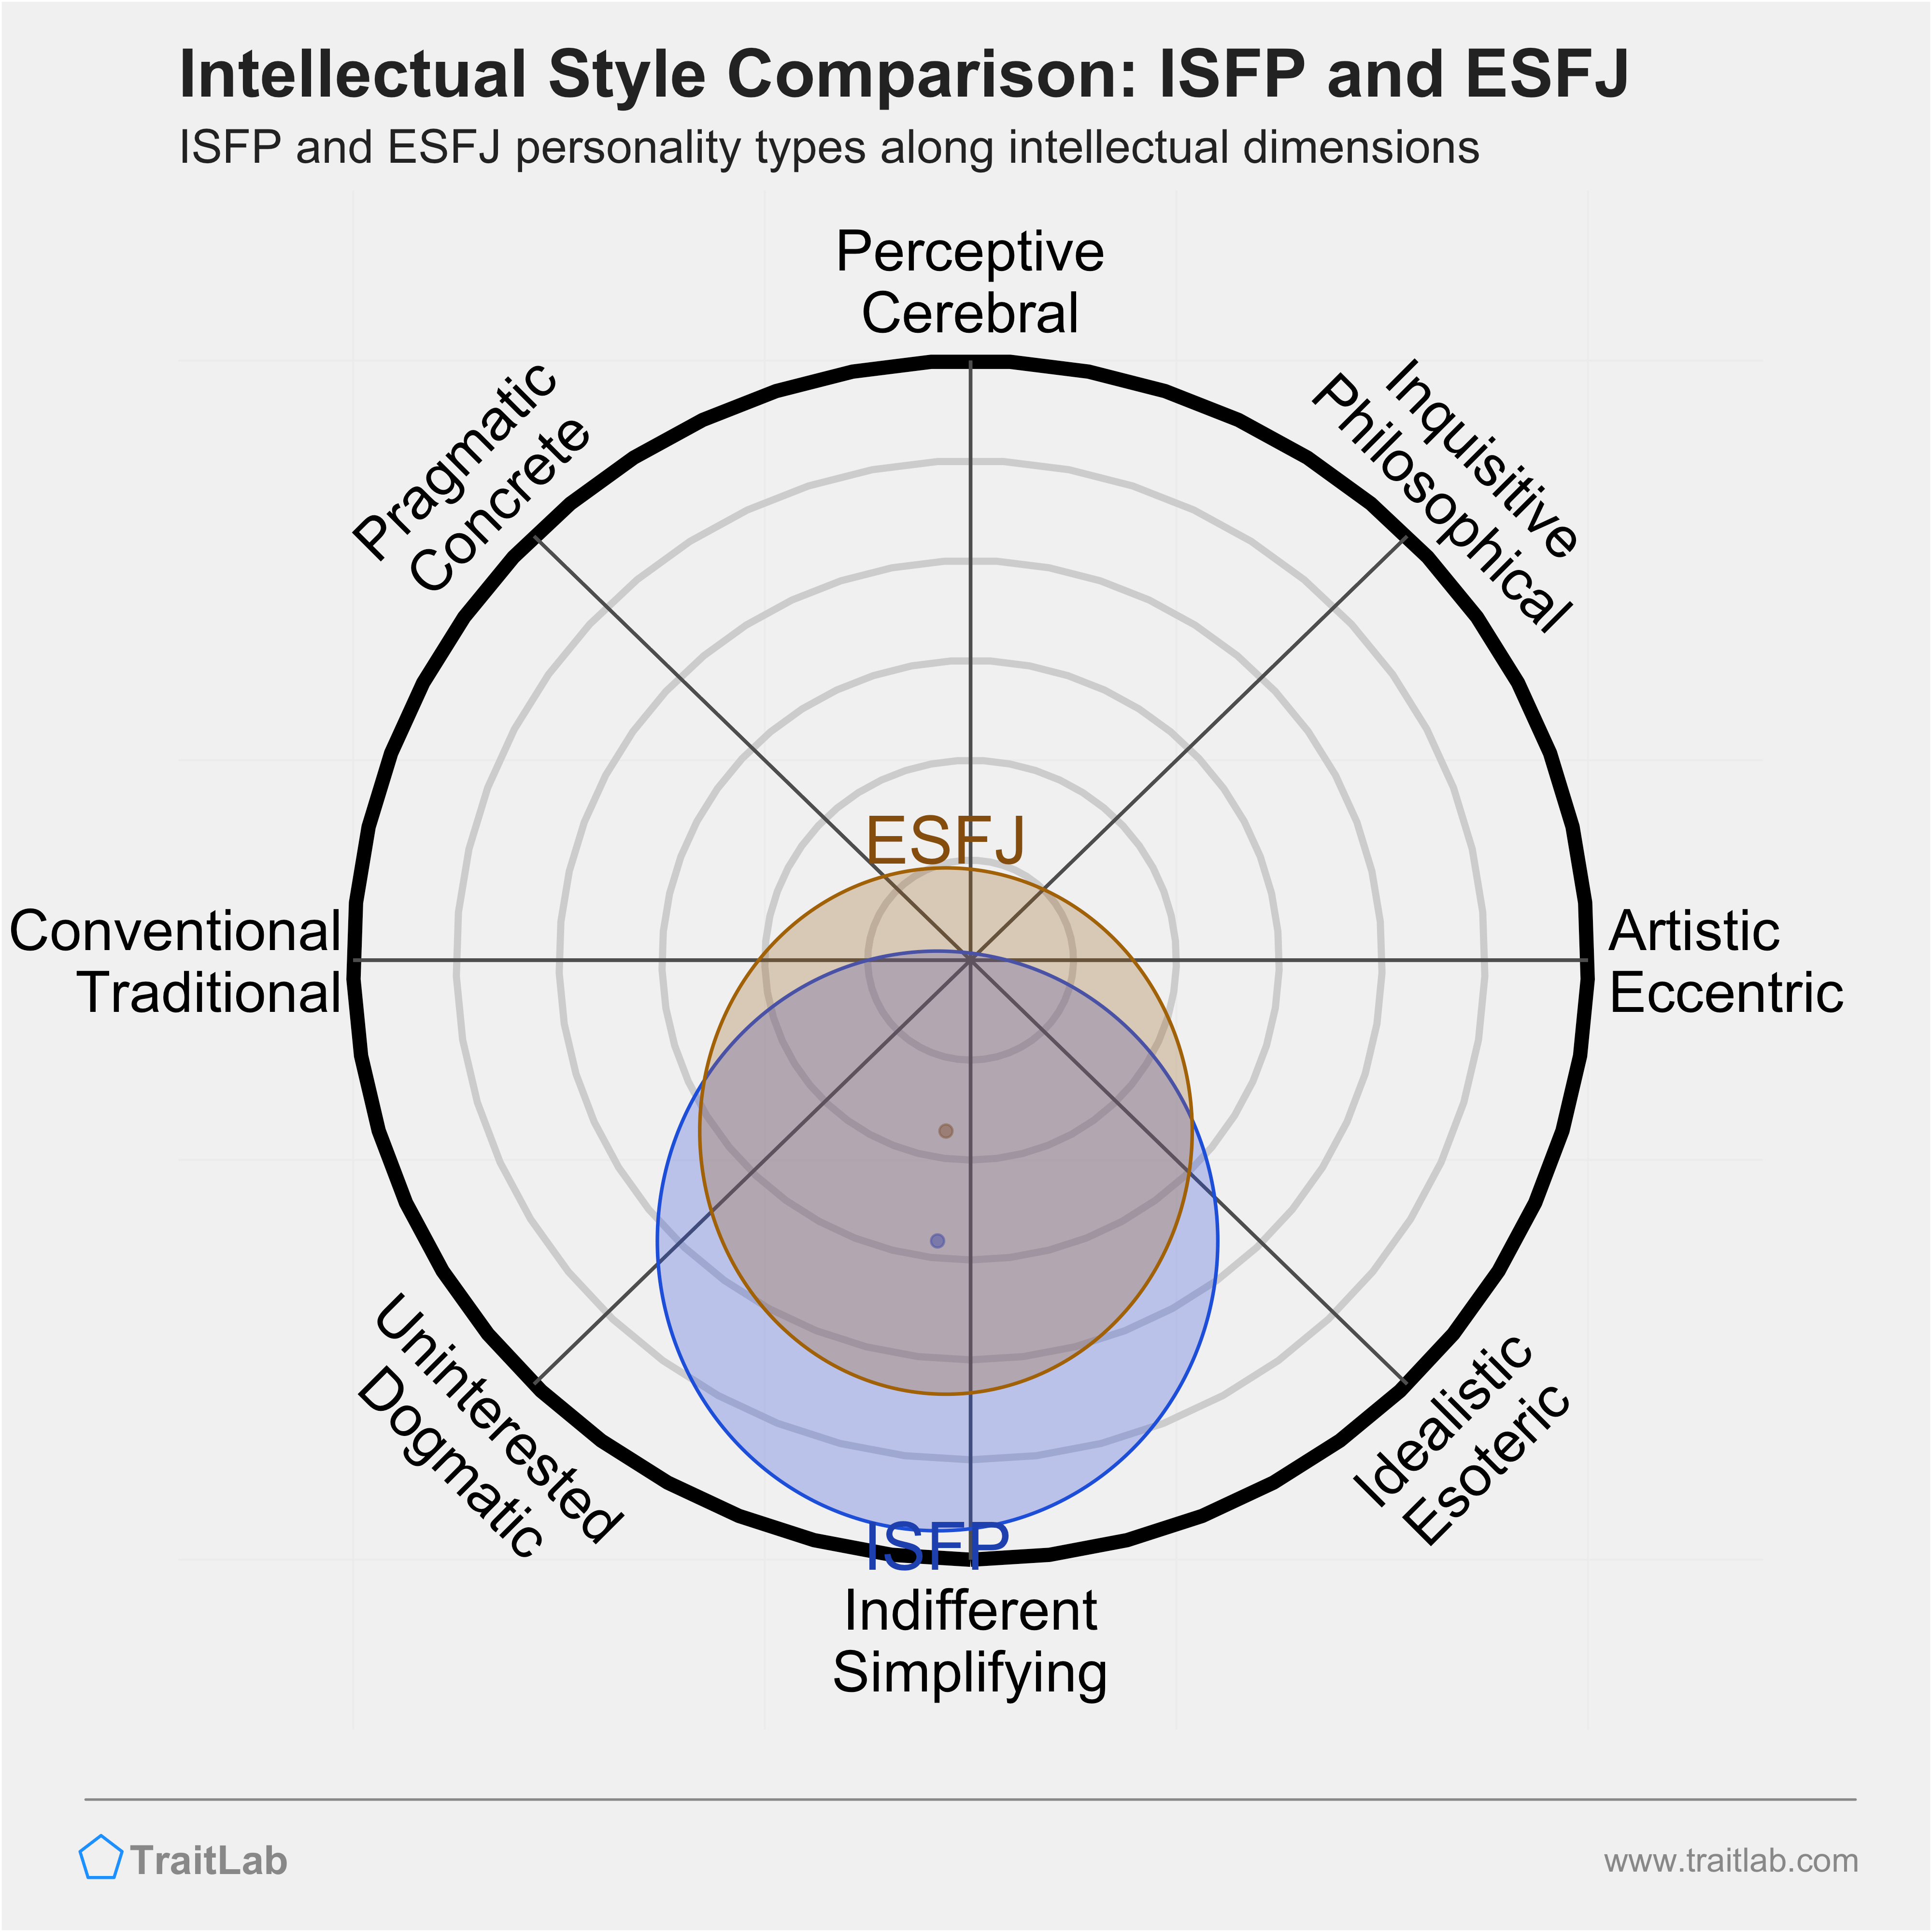 ISFP and ESFJ comparison across intellectual dimensions